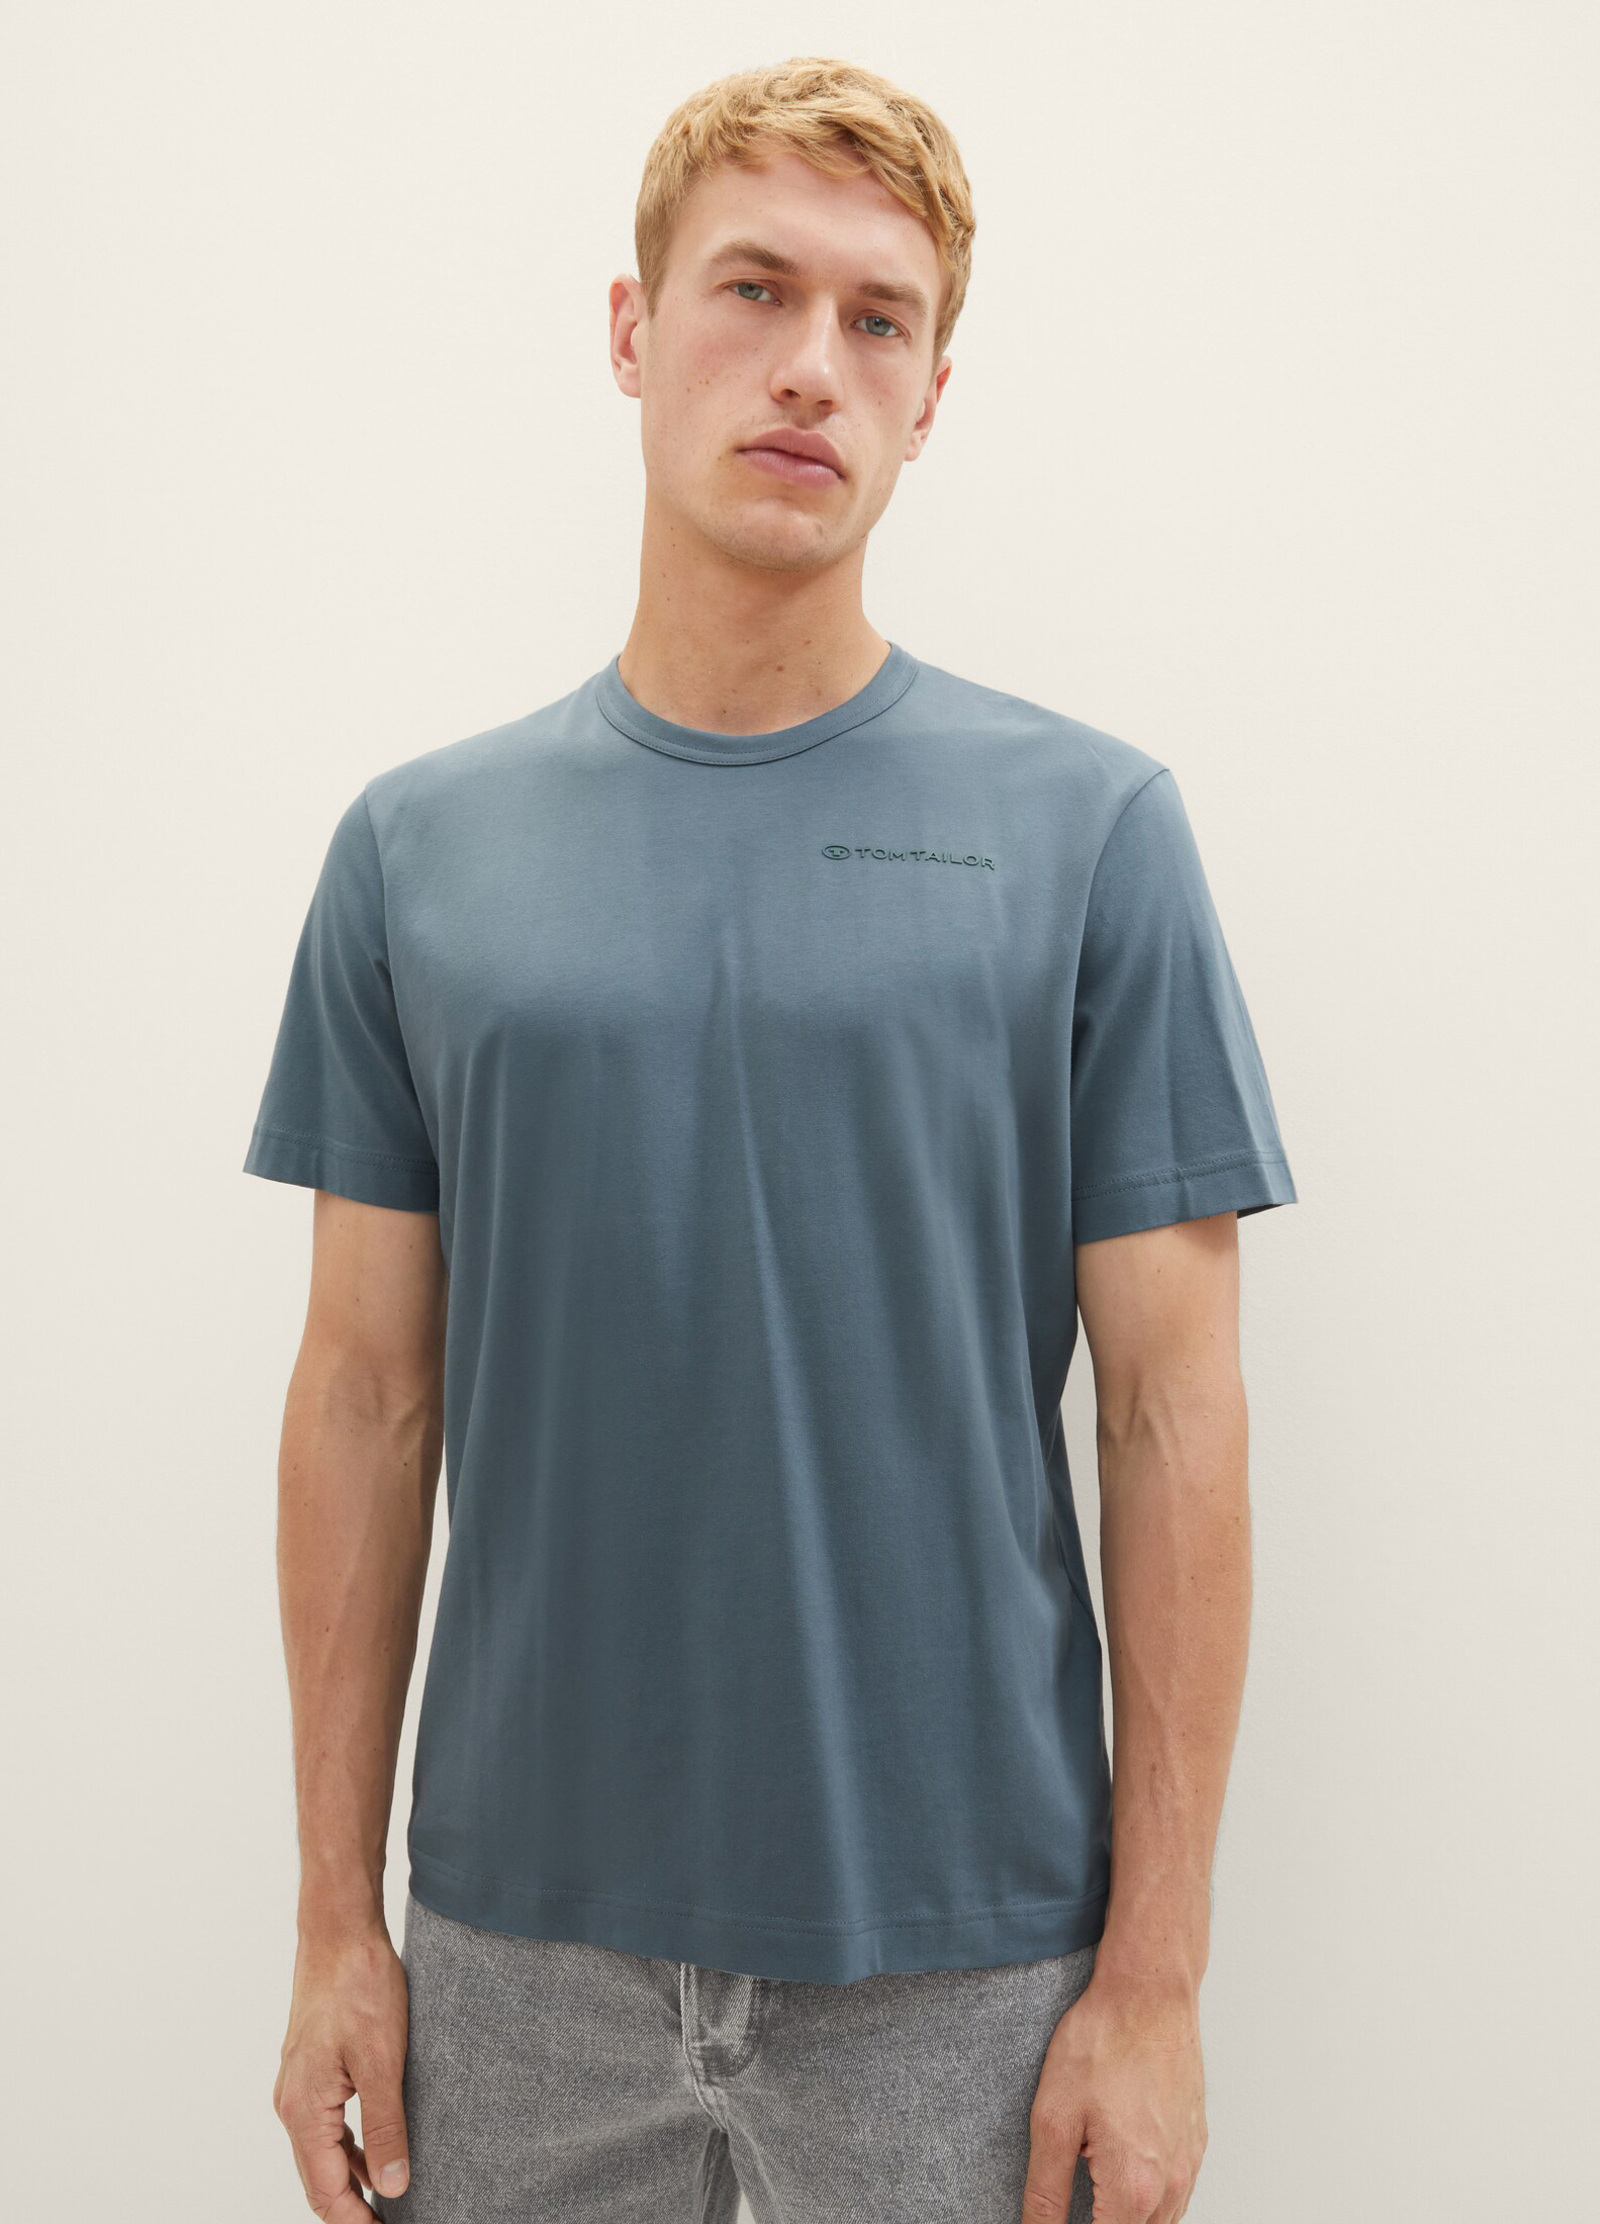 Tom Tailor® Basic - Dark Dusty Teal T-shirt Size L